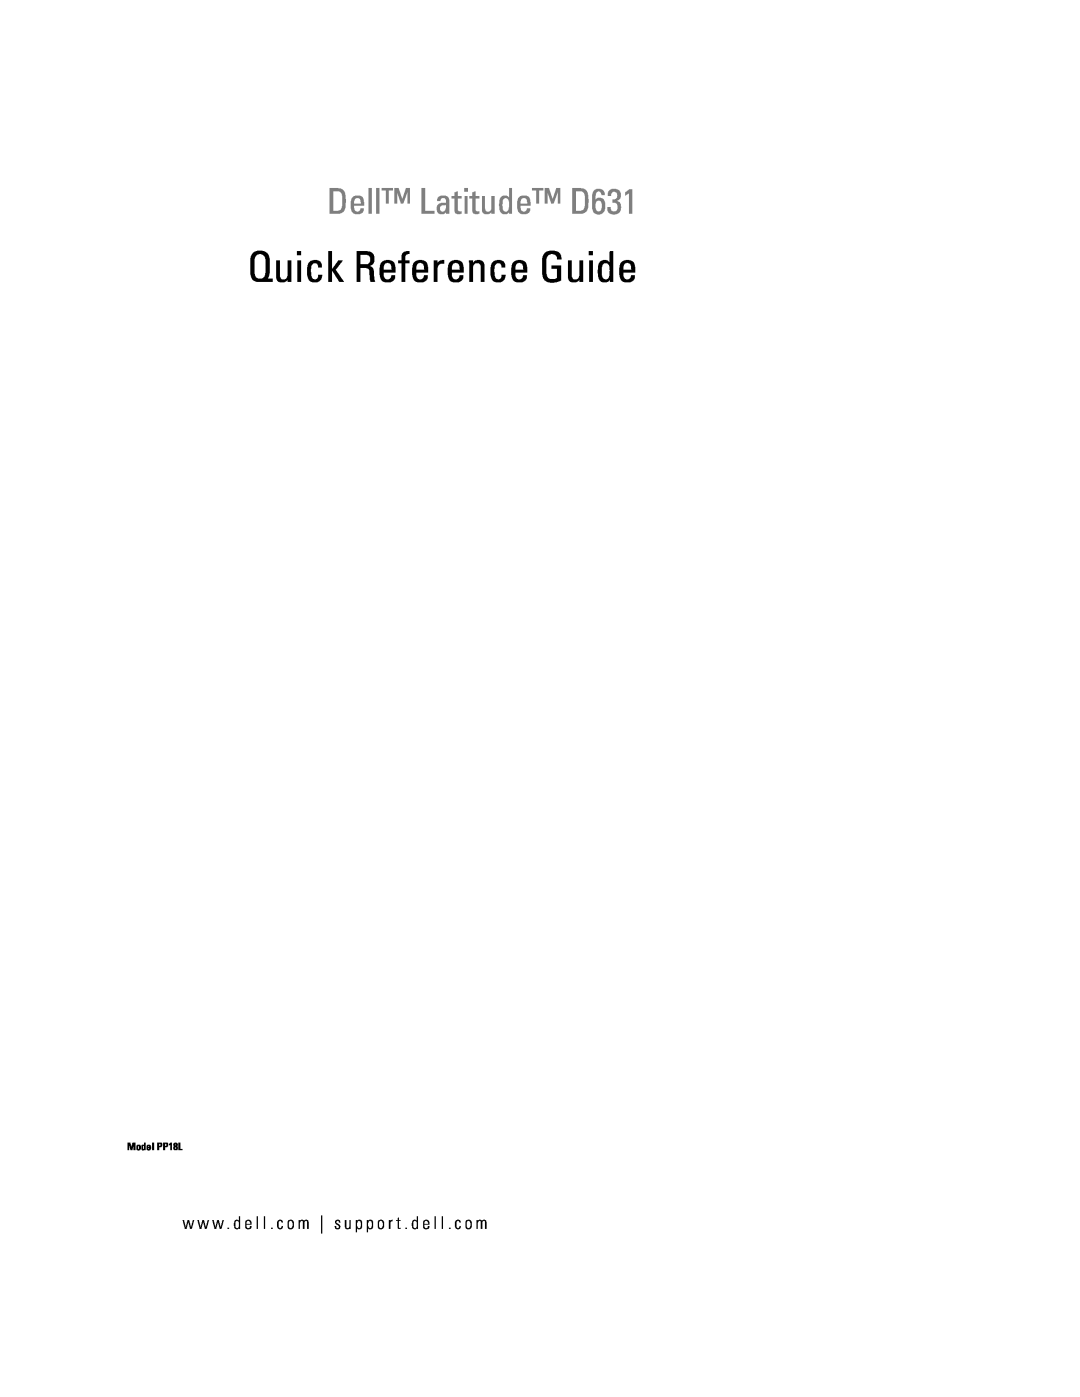 Dell XP140 manual Dell Latitude D631, Quick Reference Guide, Model PP18L 